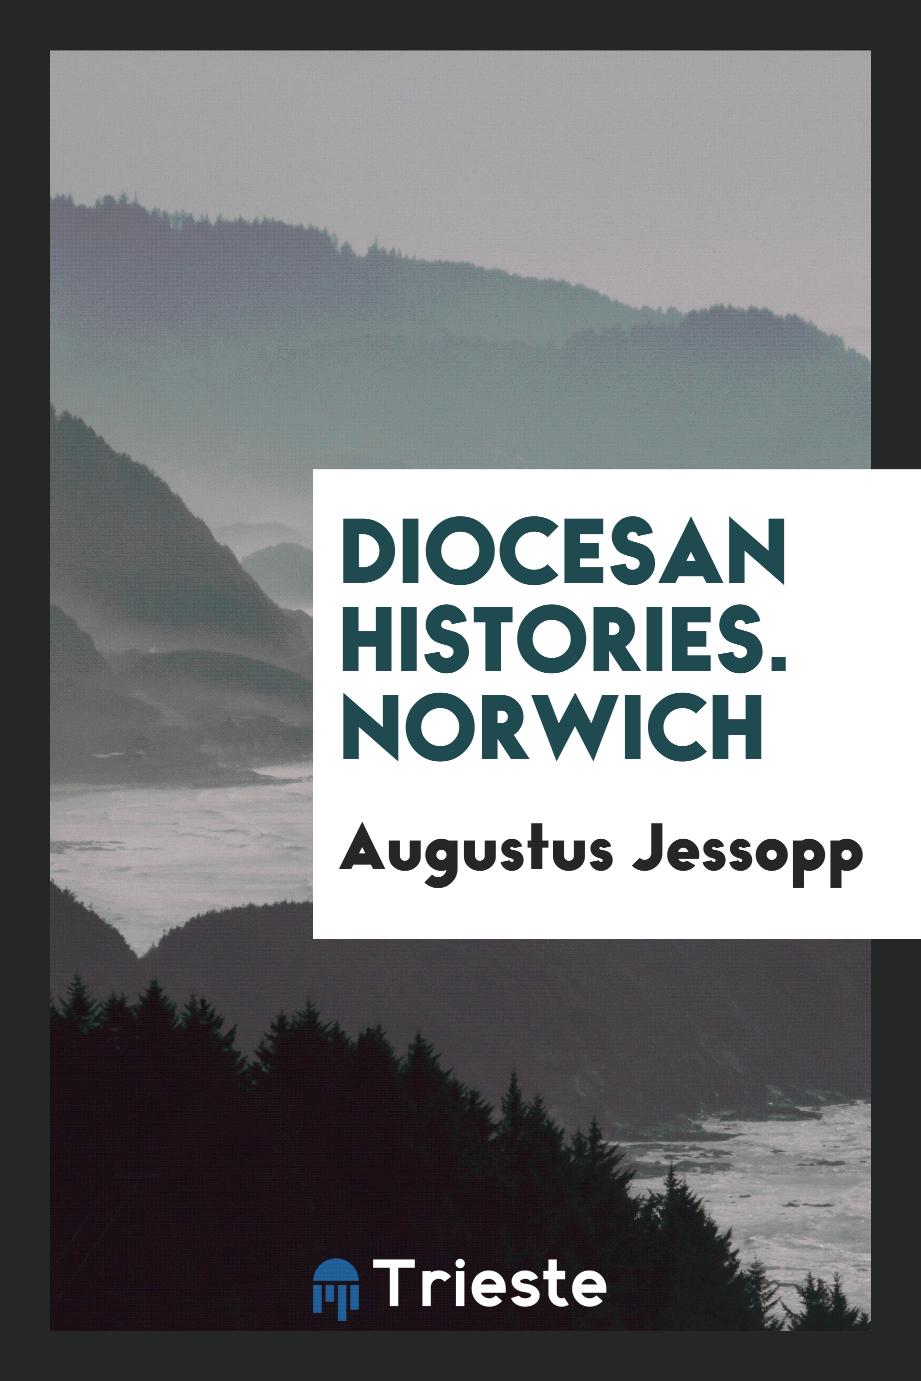 Diocesan histories. Norwich